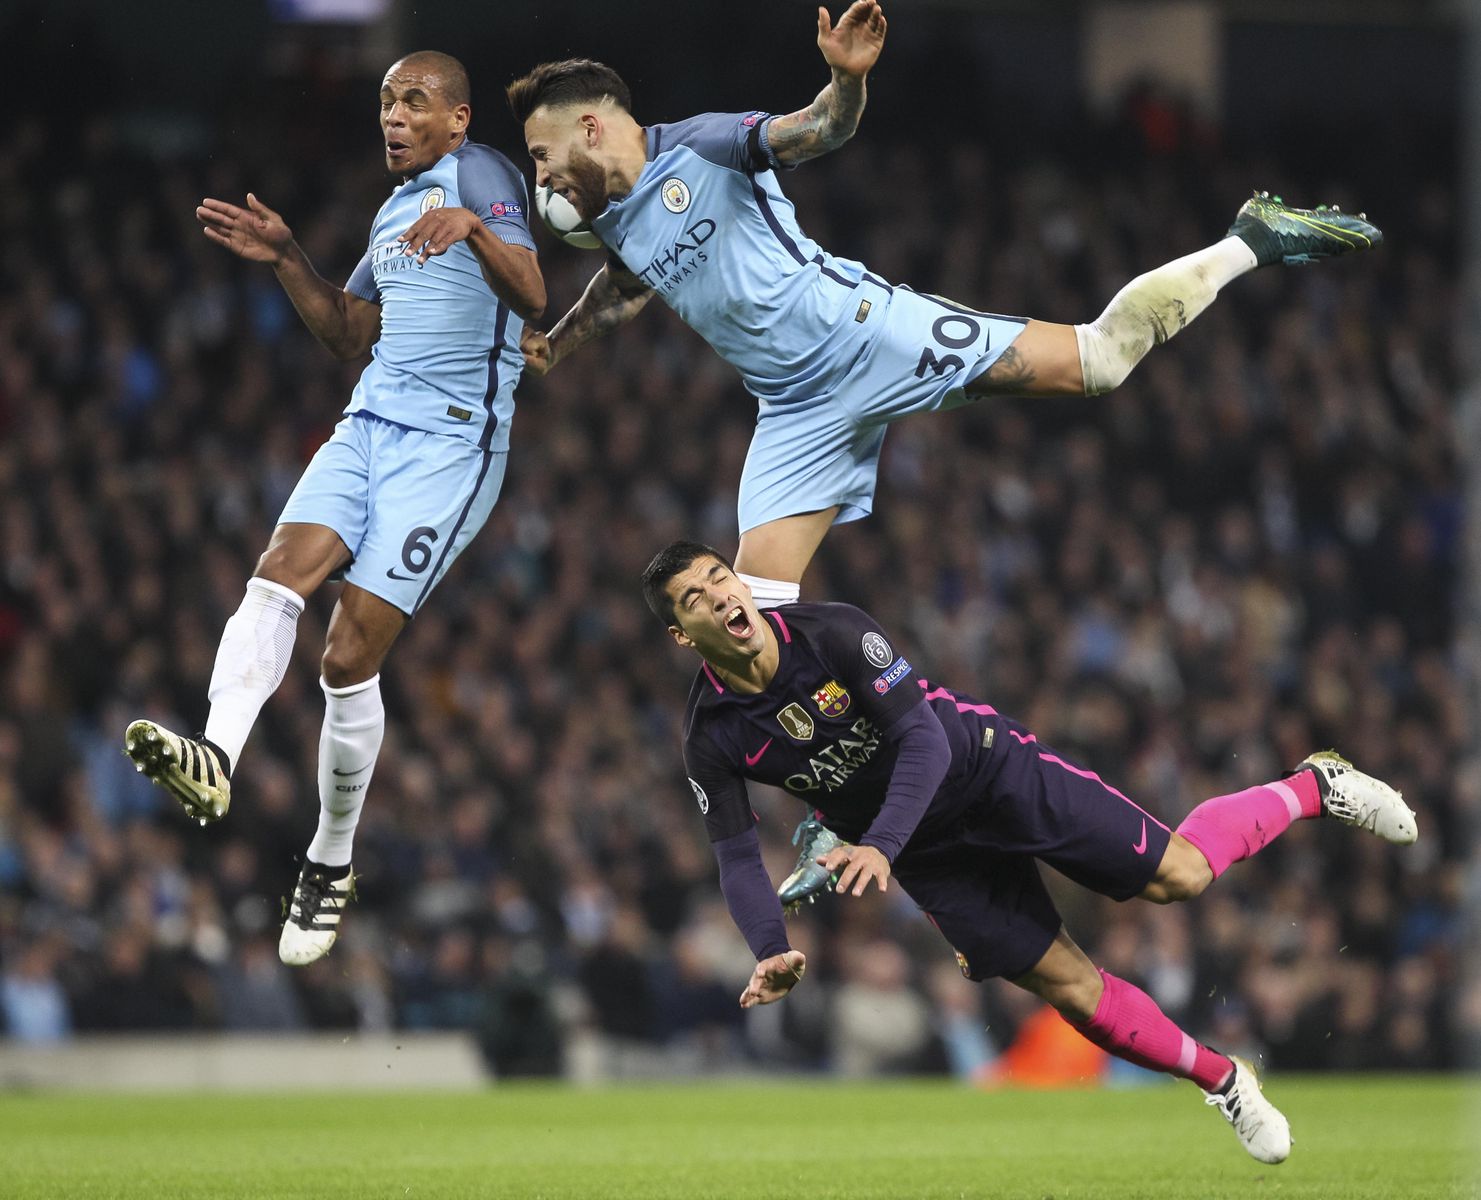 Fernando, Nicolas Otamendi and Luis Suarez clash during Manchester City’s Champions League win against Barcelona at the Etihad Stadium. (300mm, ISO2000, 1/1250th, f2.8)